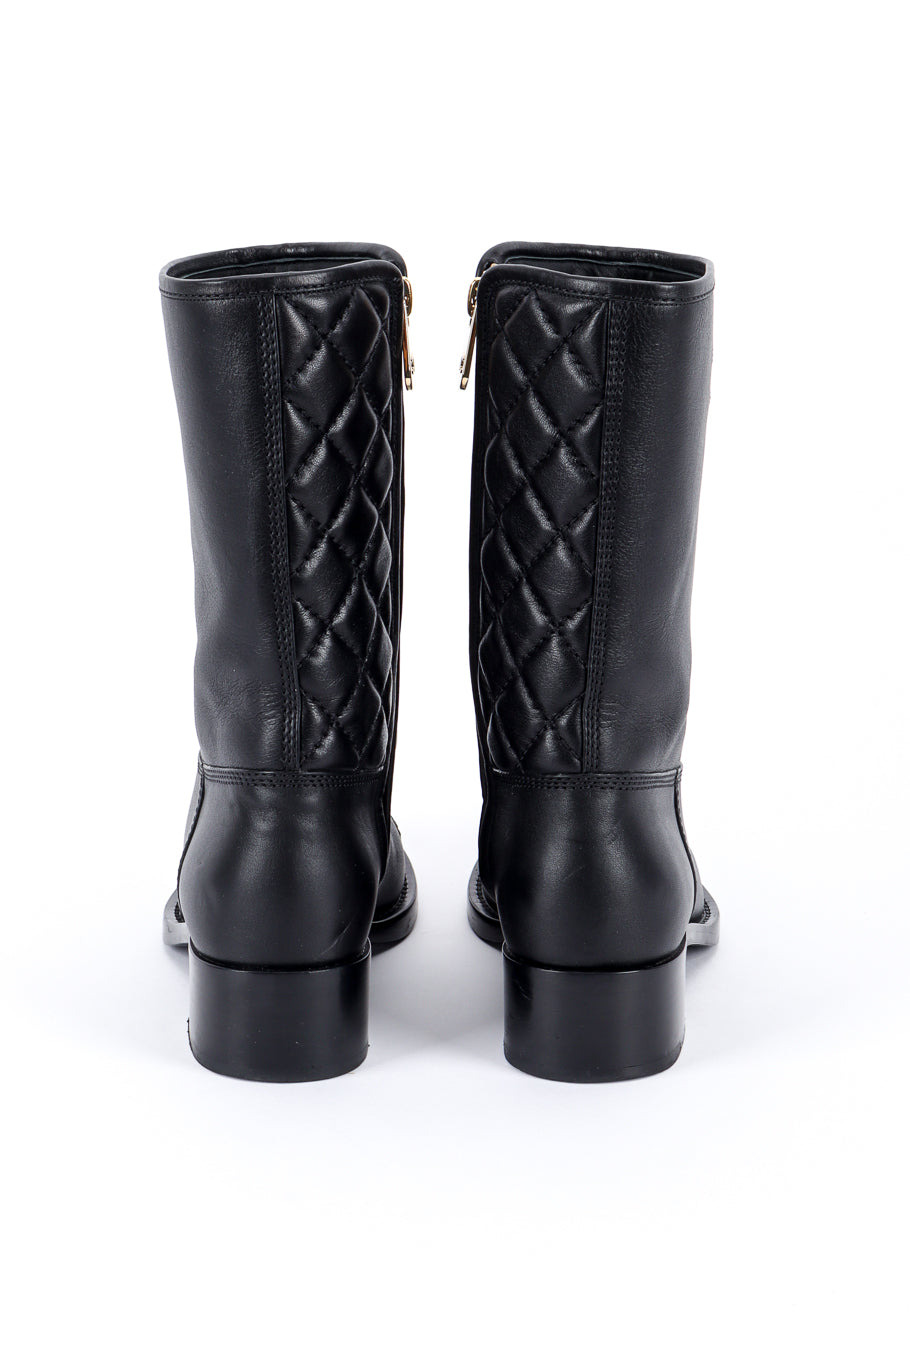 Chanel CC Quilted Mid-Calf Boots back @recess la